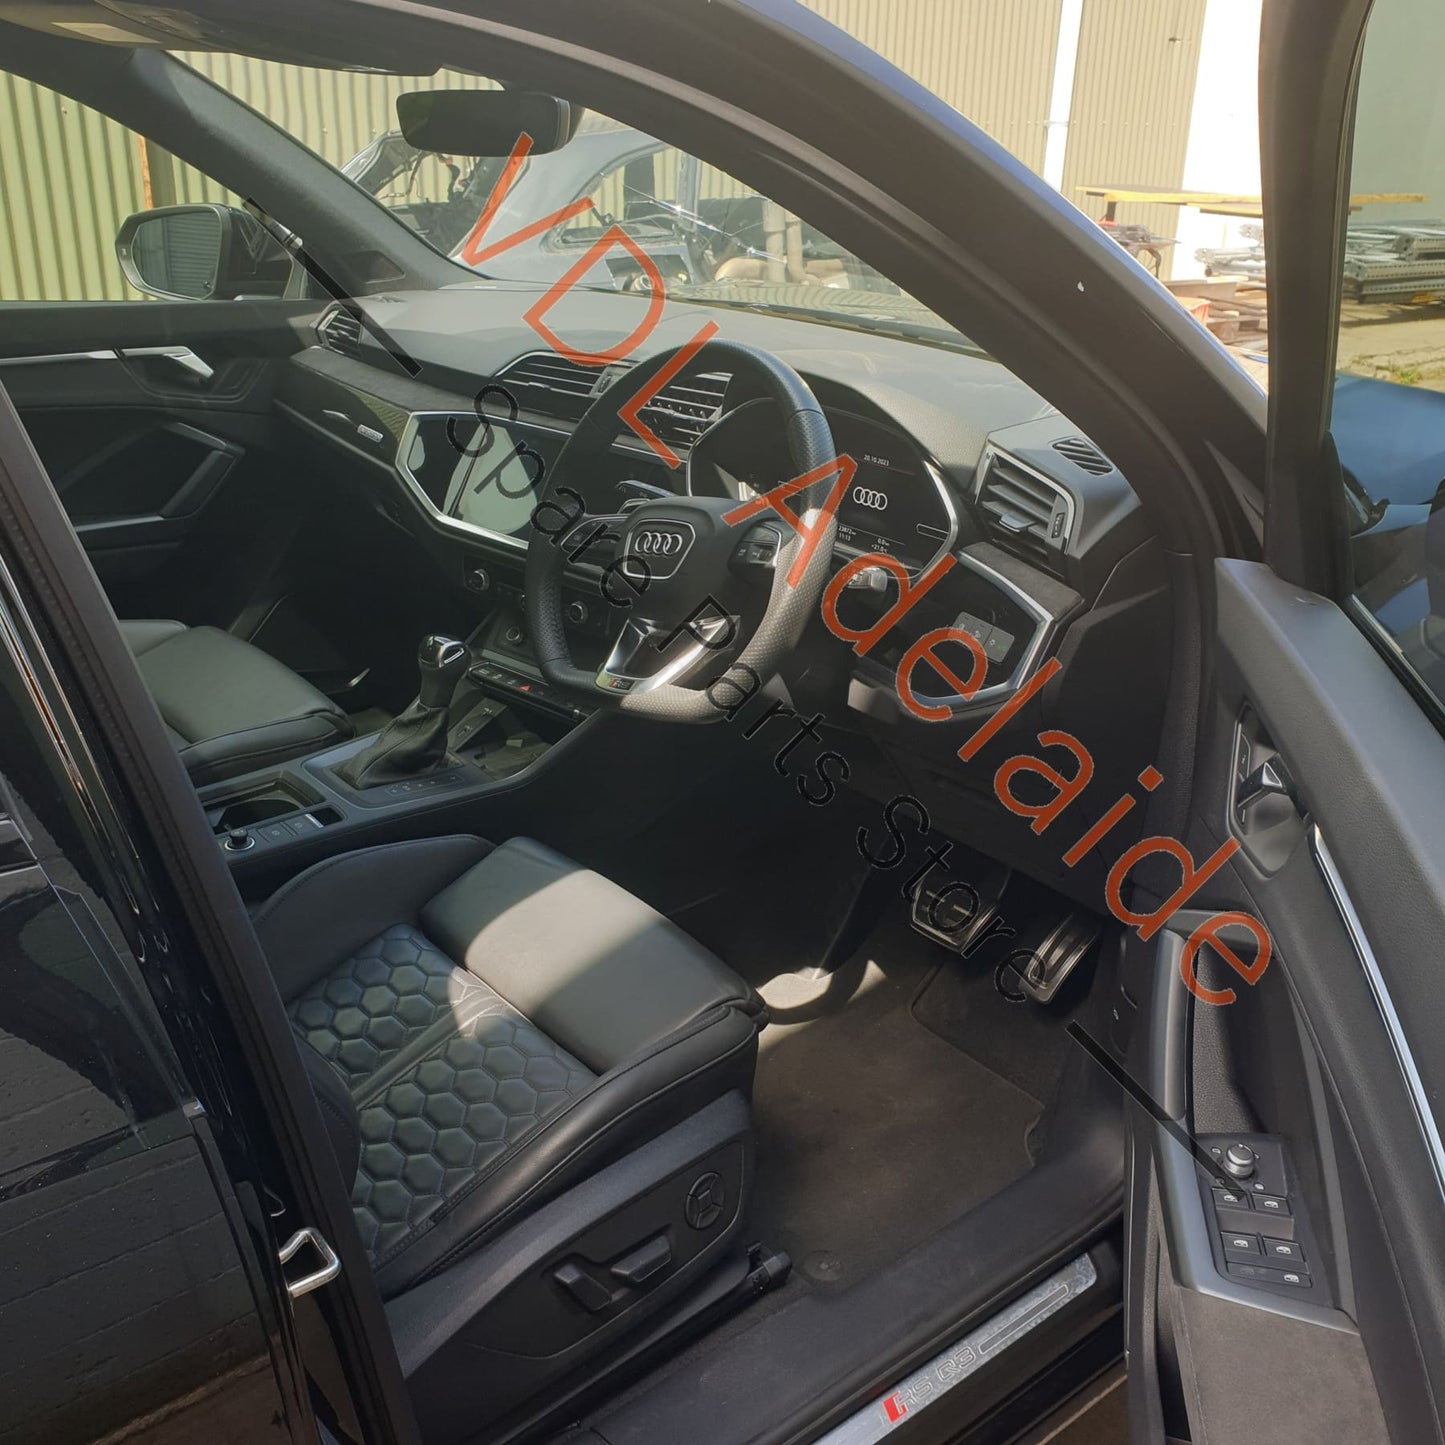 81A8575119B9 81A857511K9B9   Audi RSQ3 F3 Black Interior Rear View Mirror 81A857511 9B9